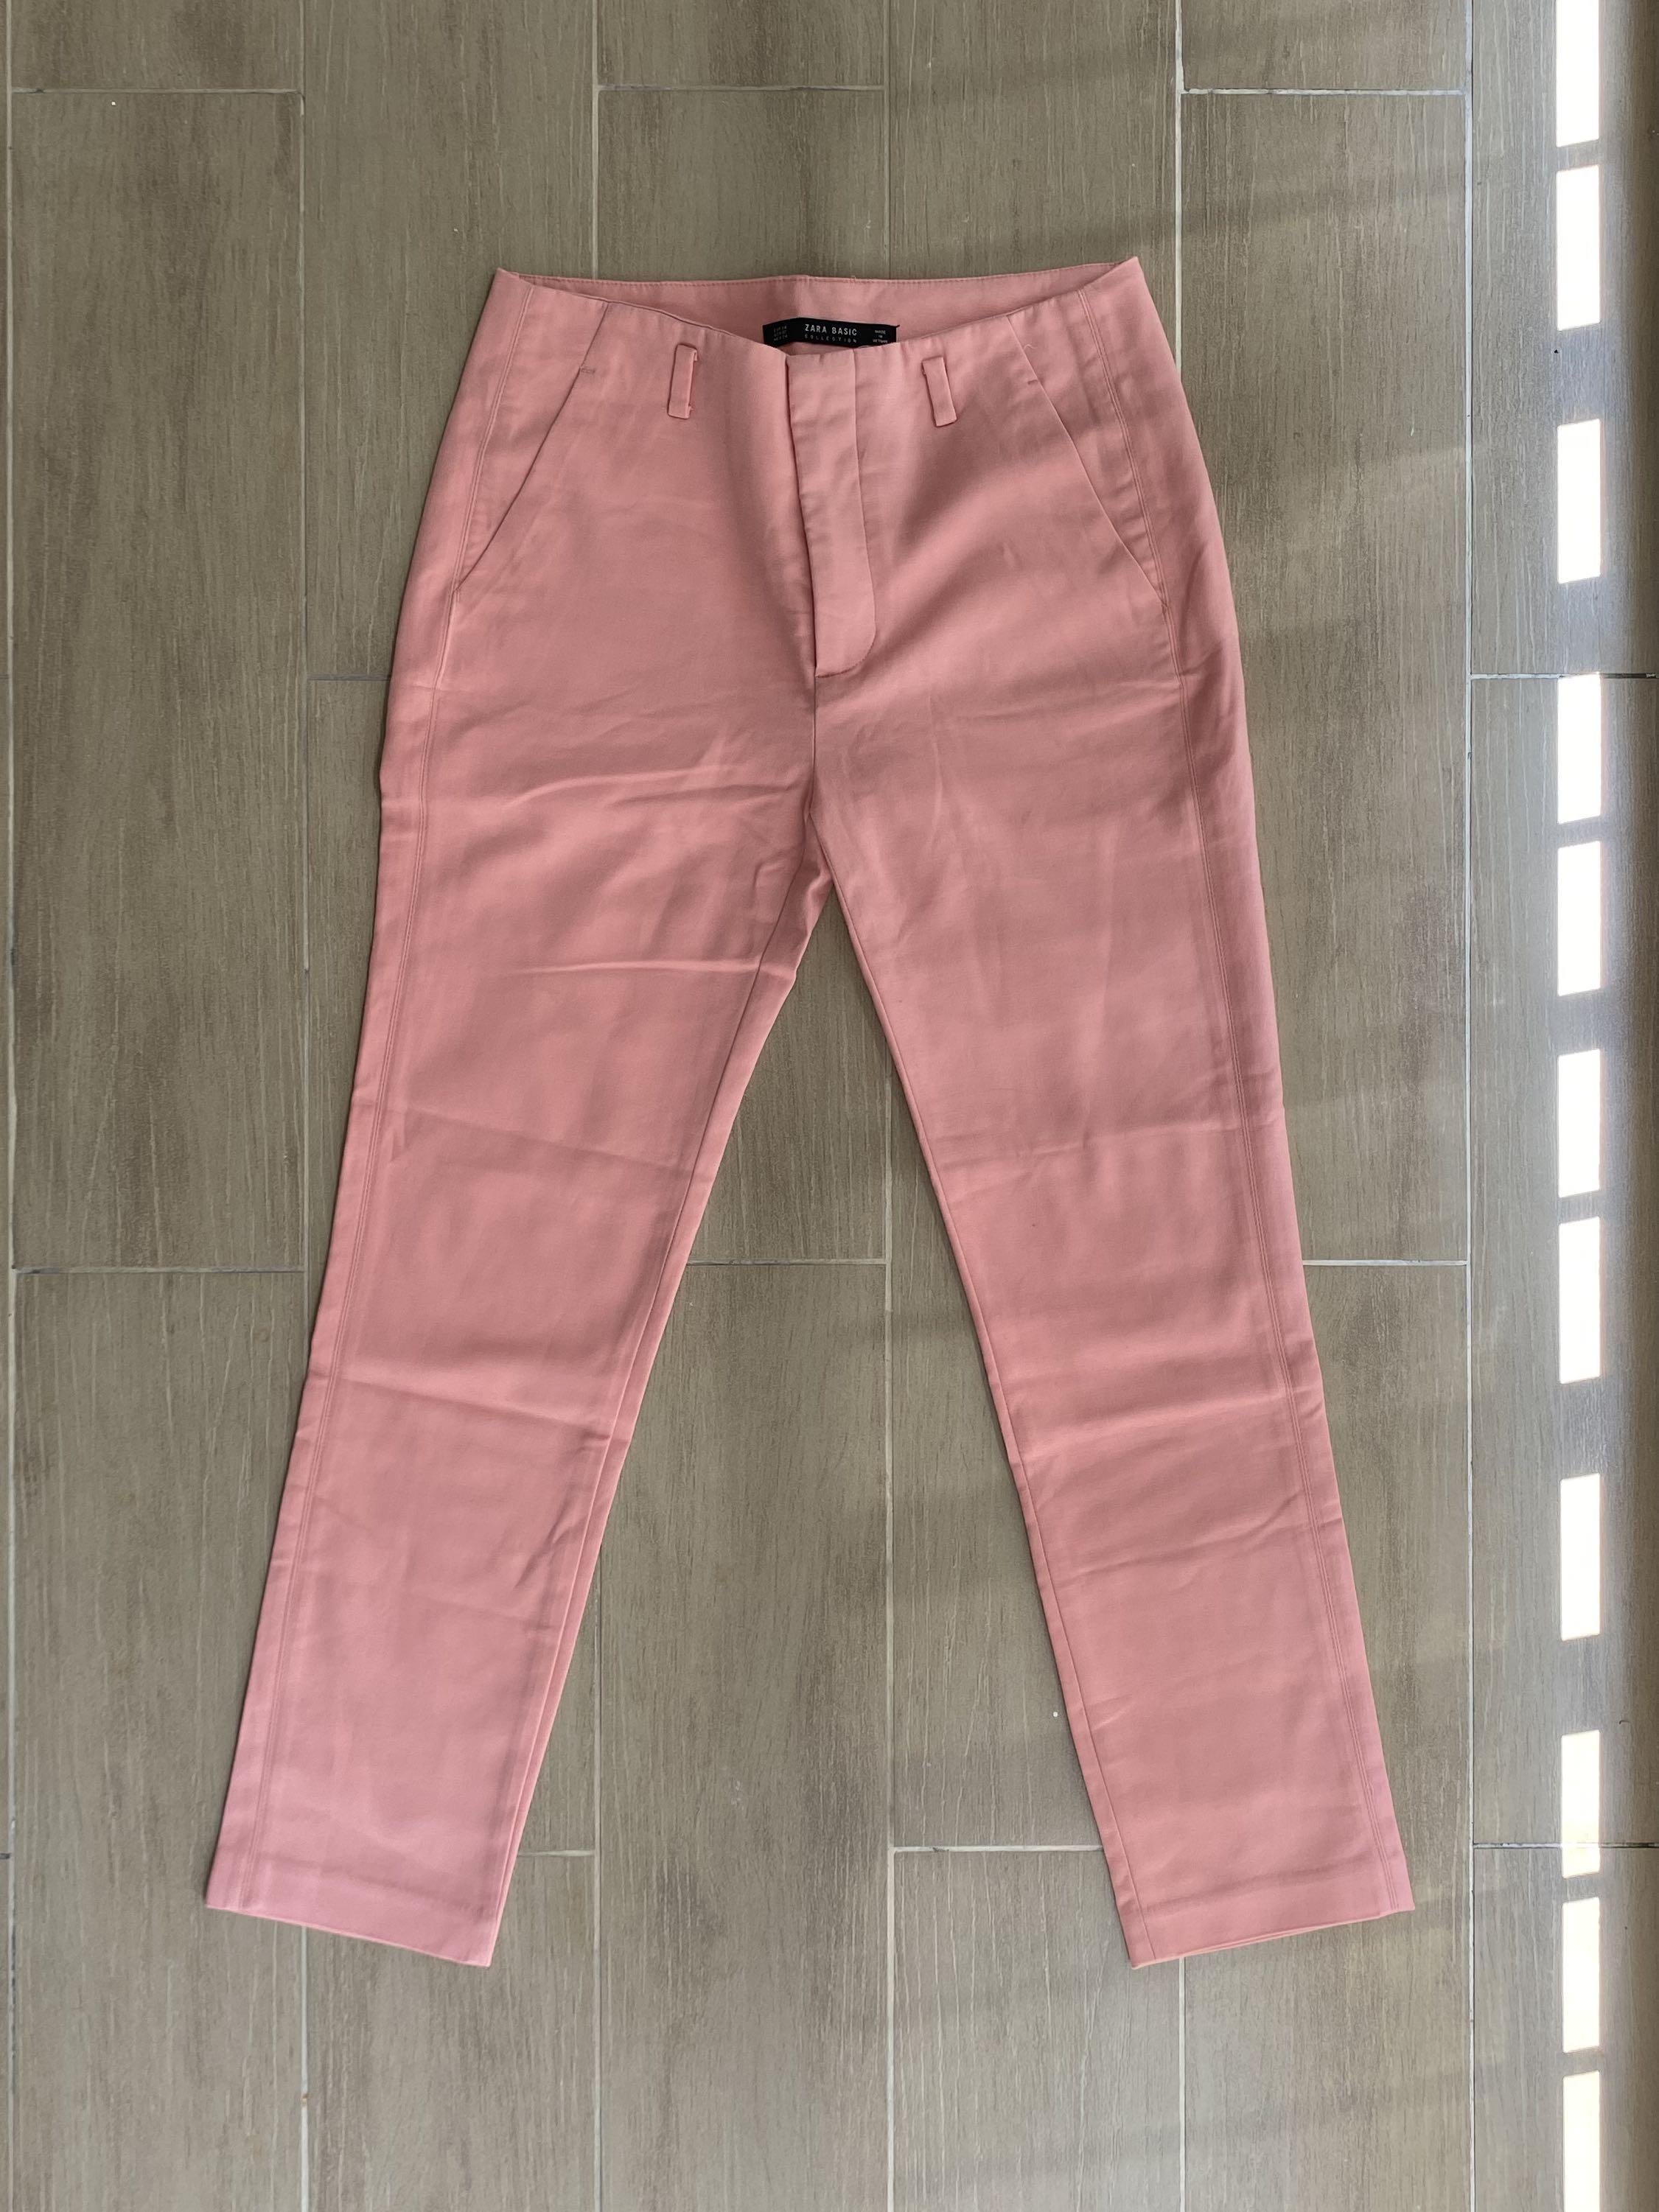 Zara Women's Suit Trousers S Cream 100% Cotton Straight Dress Pants |  eBay